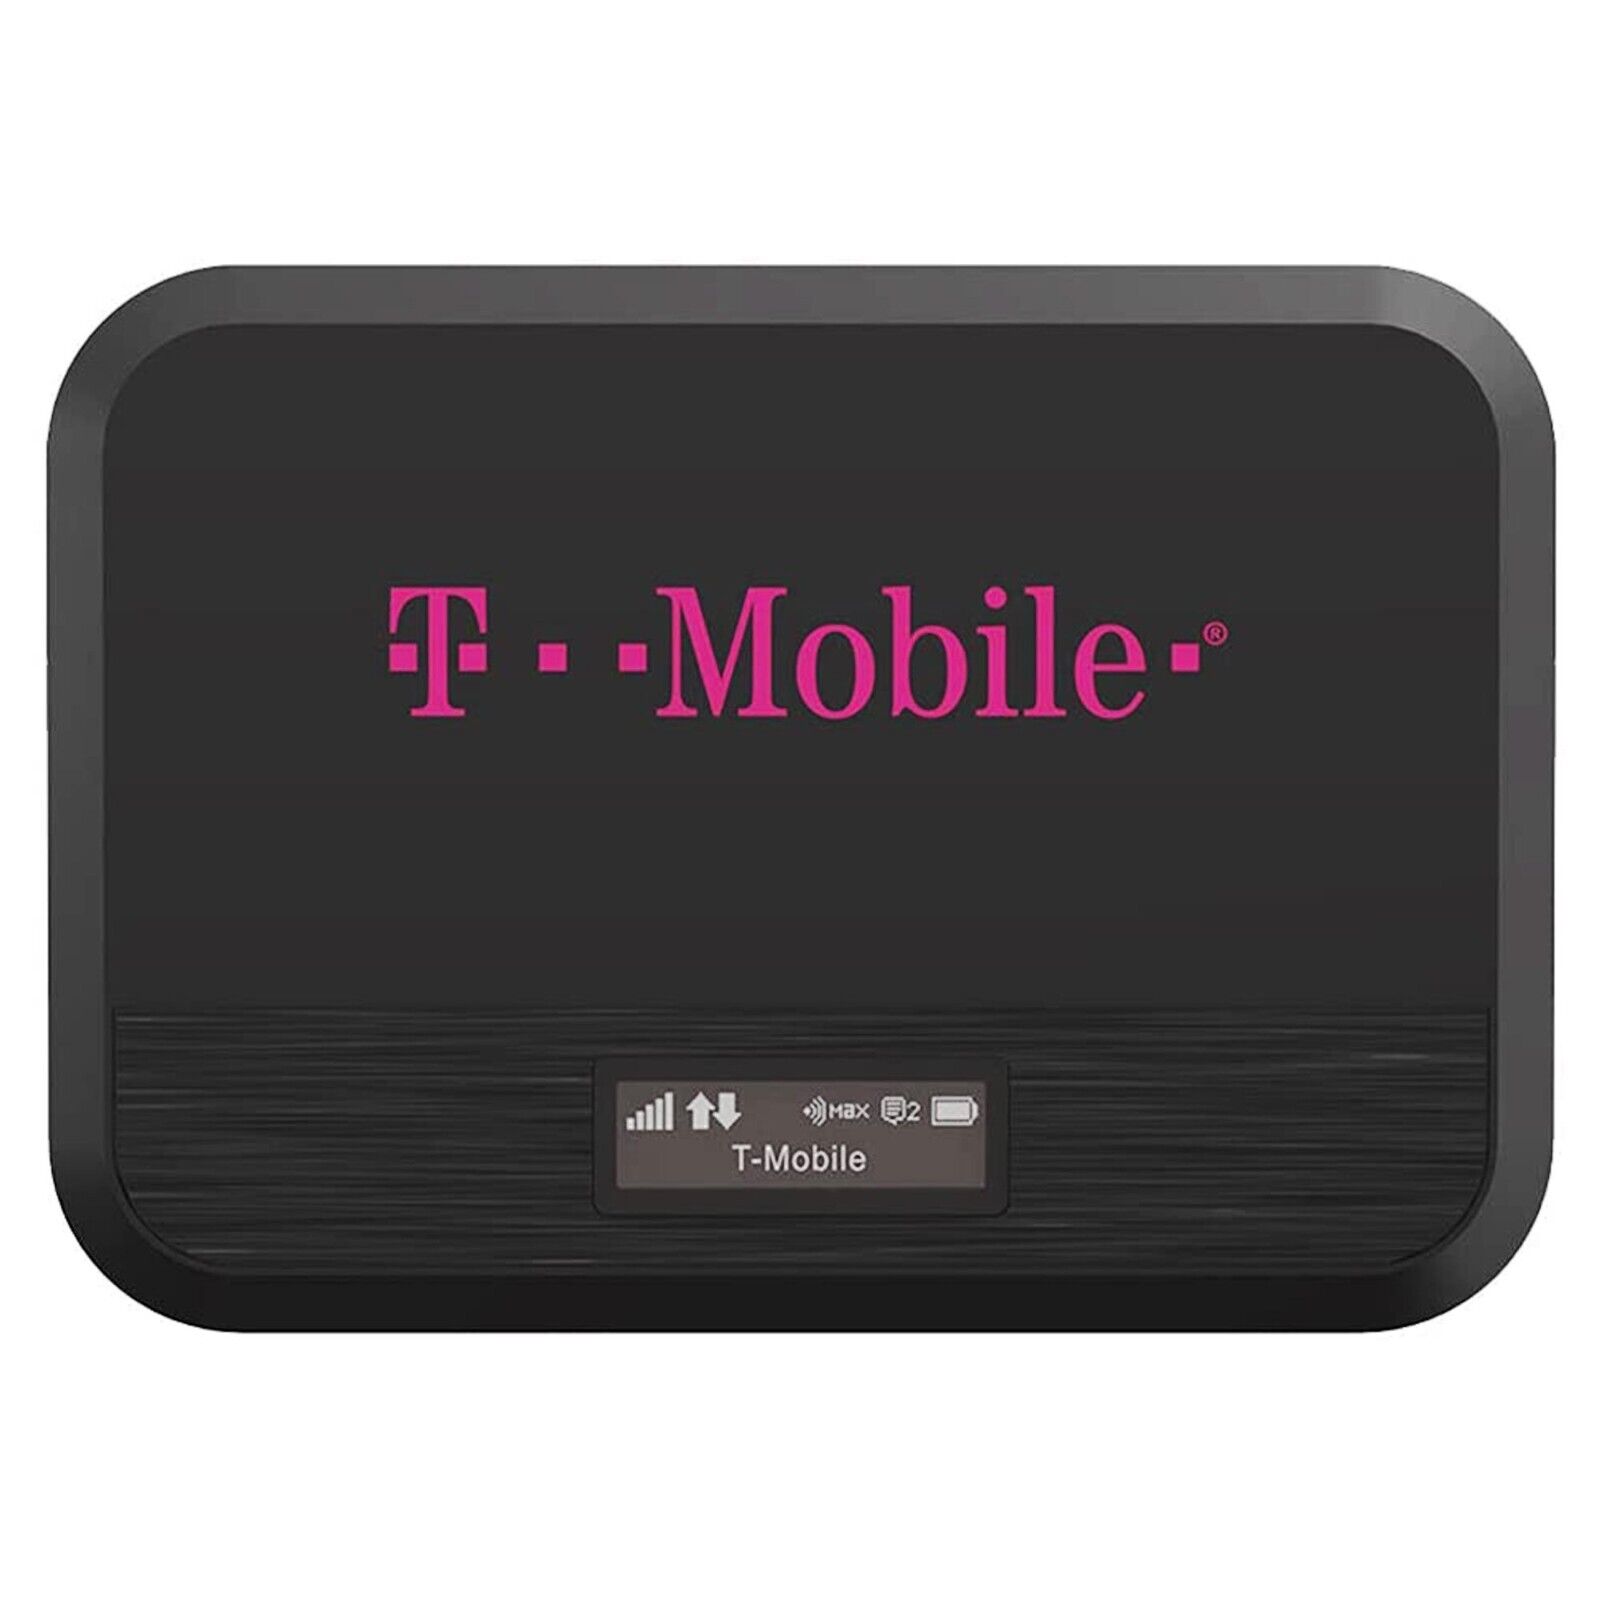 NEW Franklin T9 - Black (T-Mobile) 4G LTE Mobile Broadband WiFi Hotspot Modem